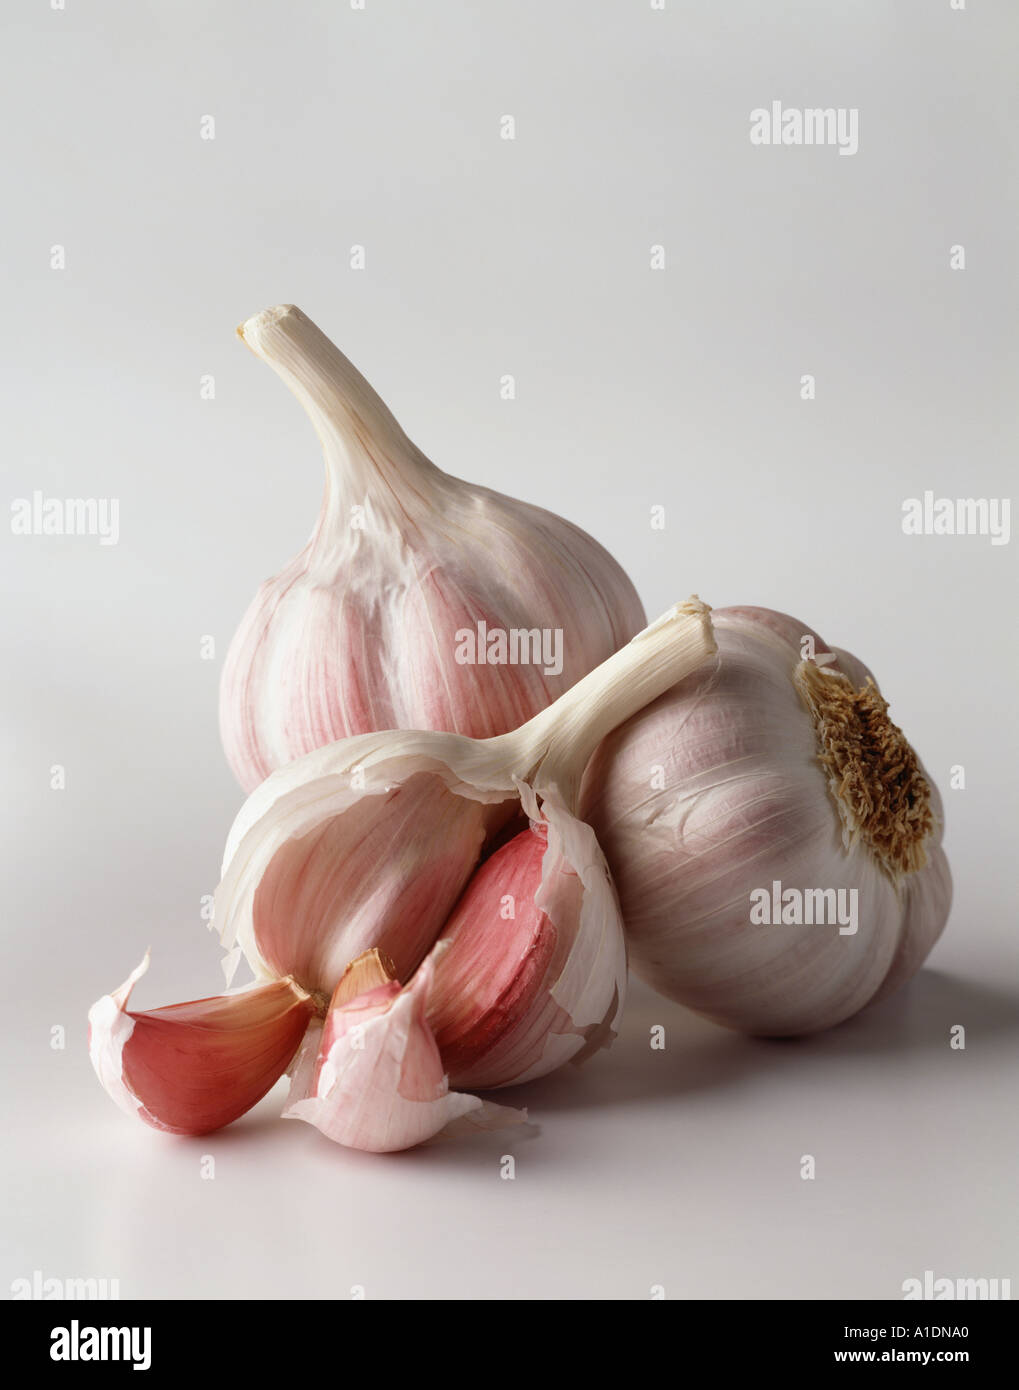 Still life of three garlic cloves one open on a white background Portrait format Original shot on 5x4 trans Stock Photo